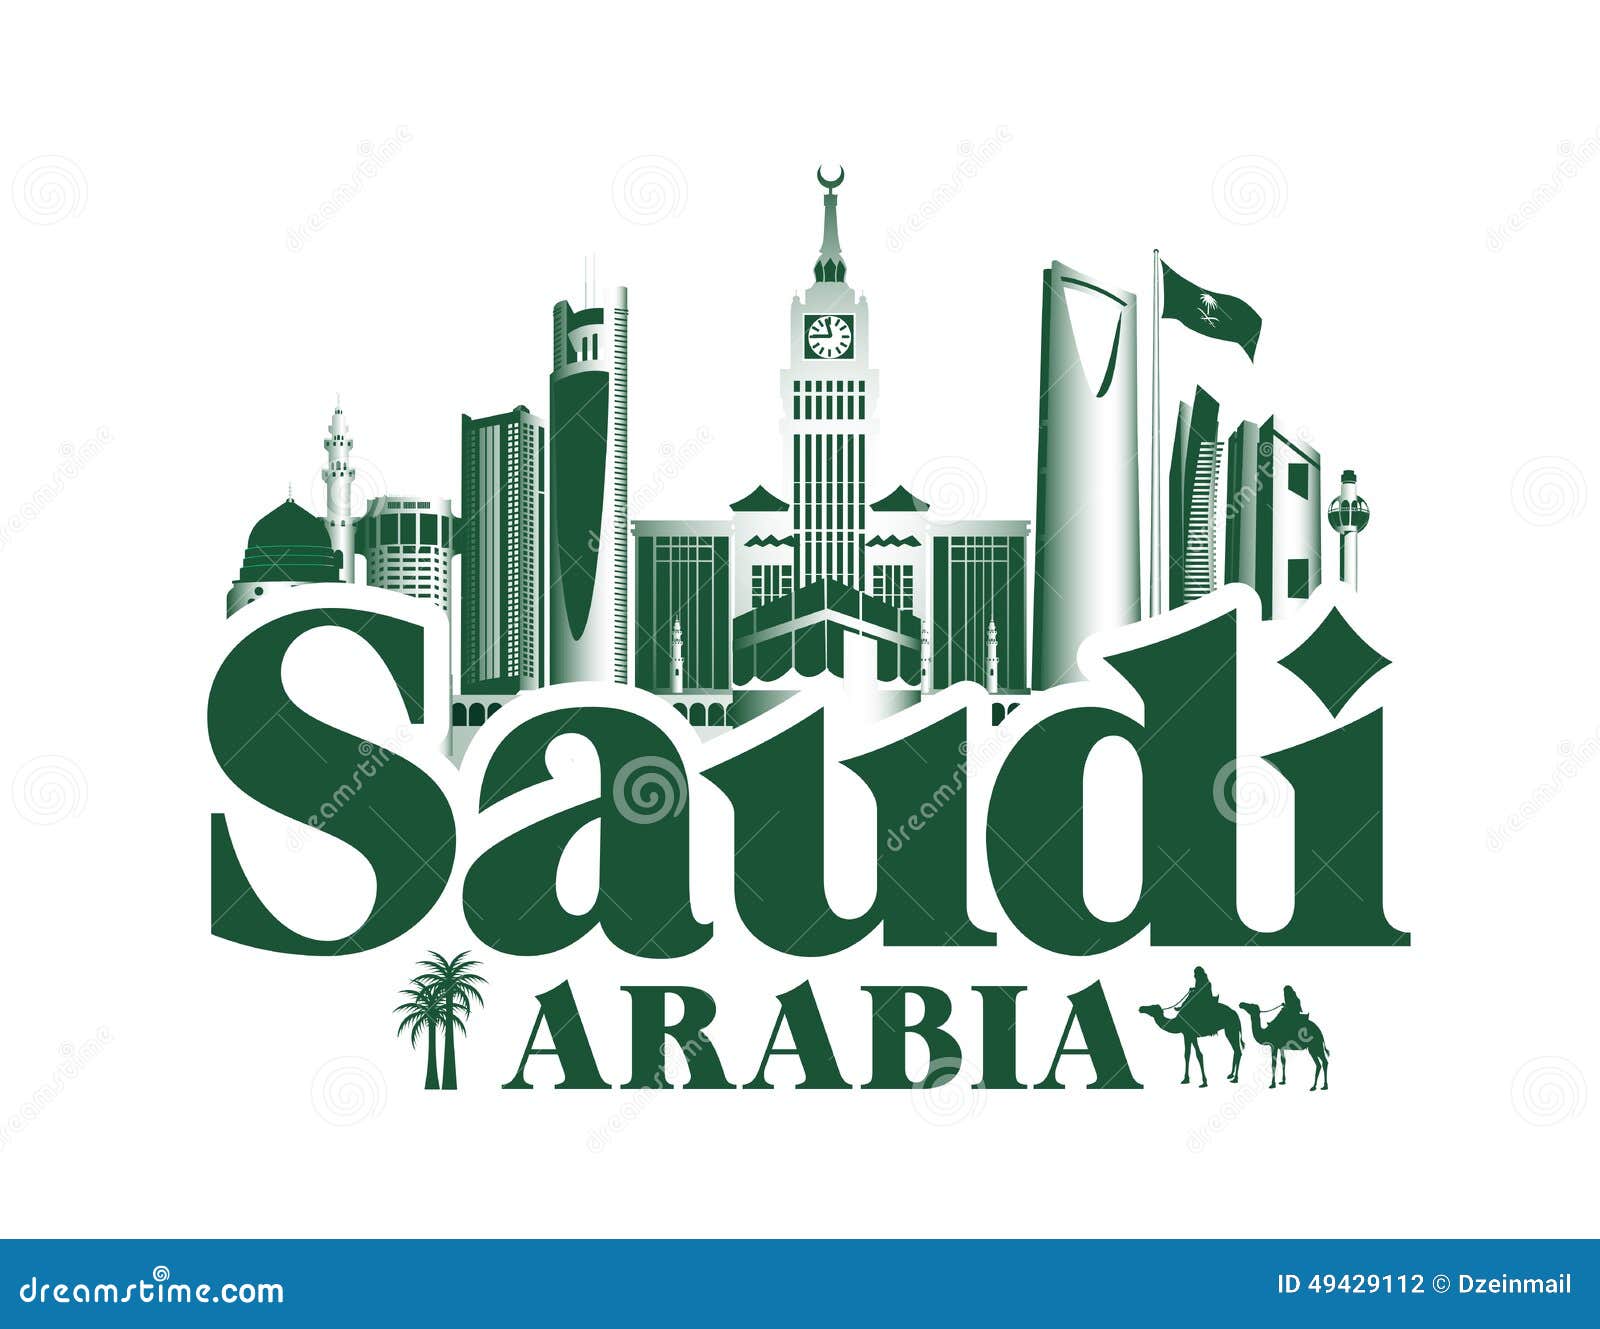 kingdom of saudi arabia famous buildings